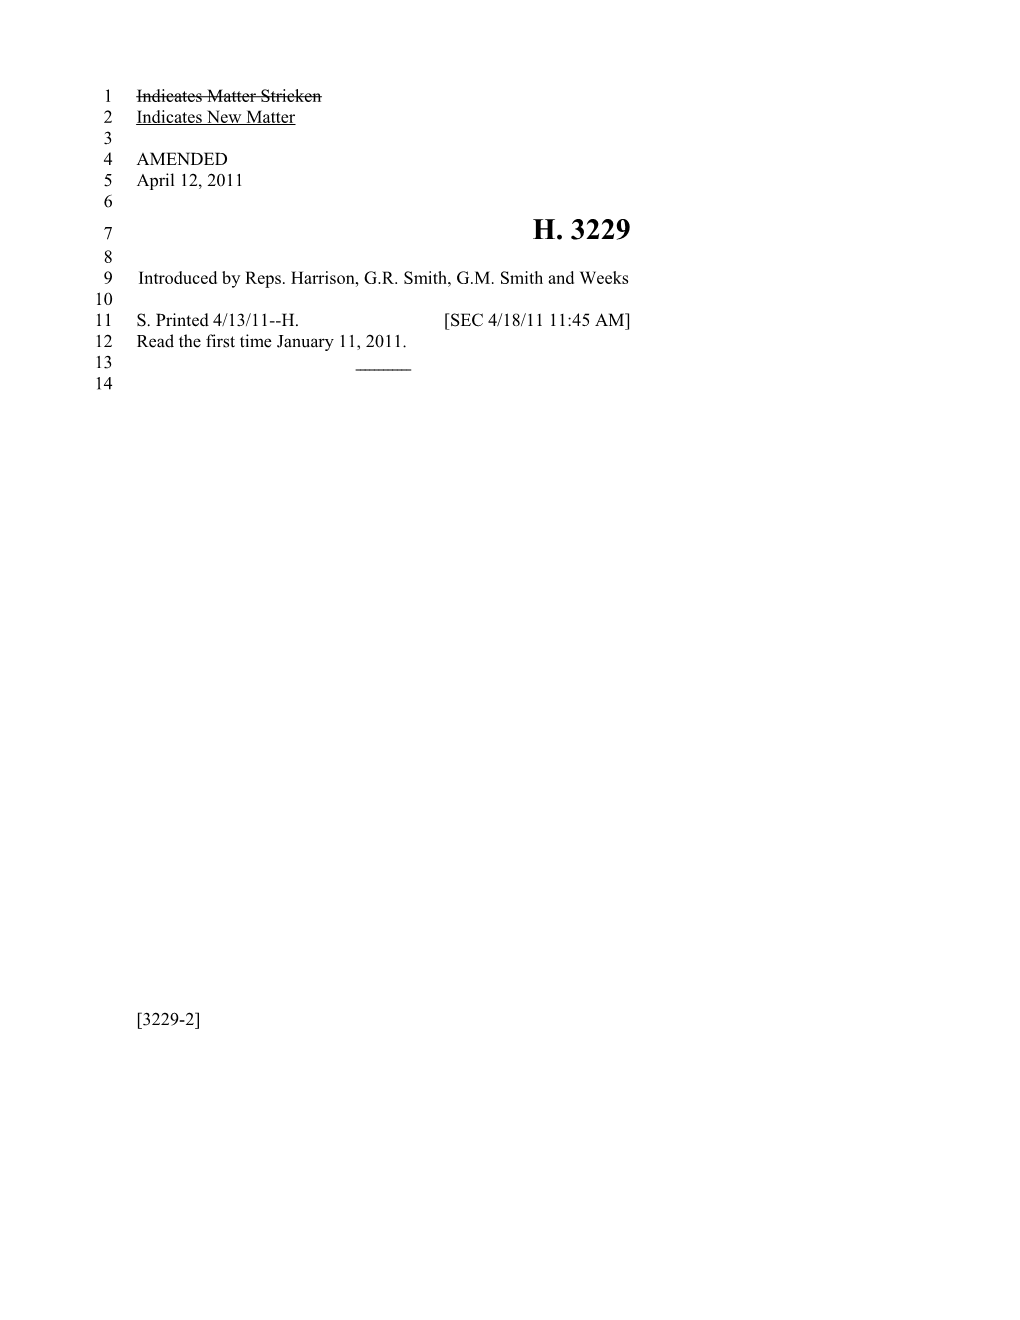 2011-2012 Bill 3229: Behavioral Health Services Act - South Carolina Legislature Online